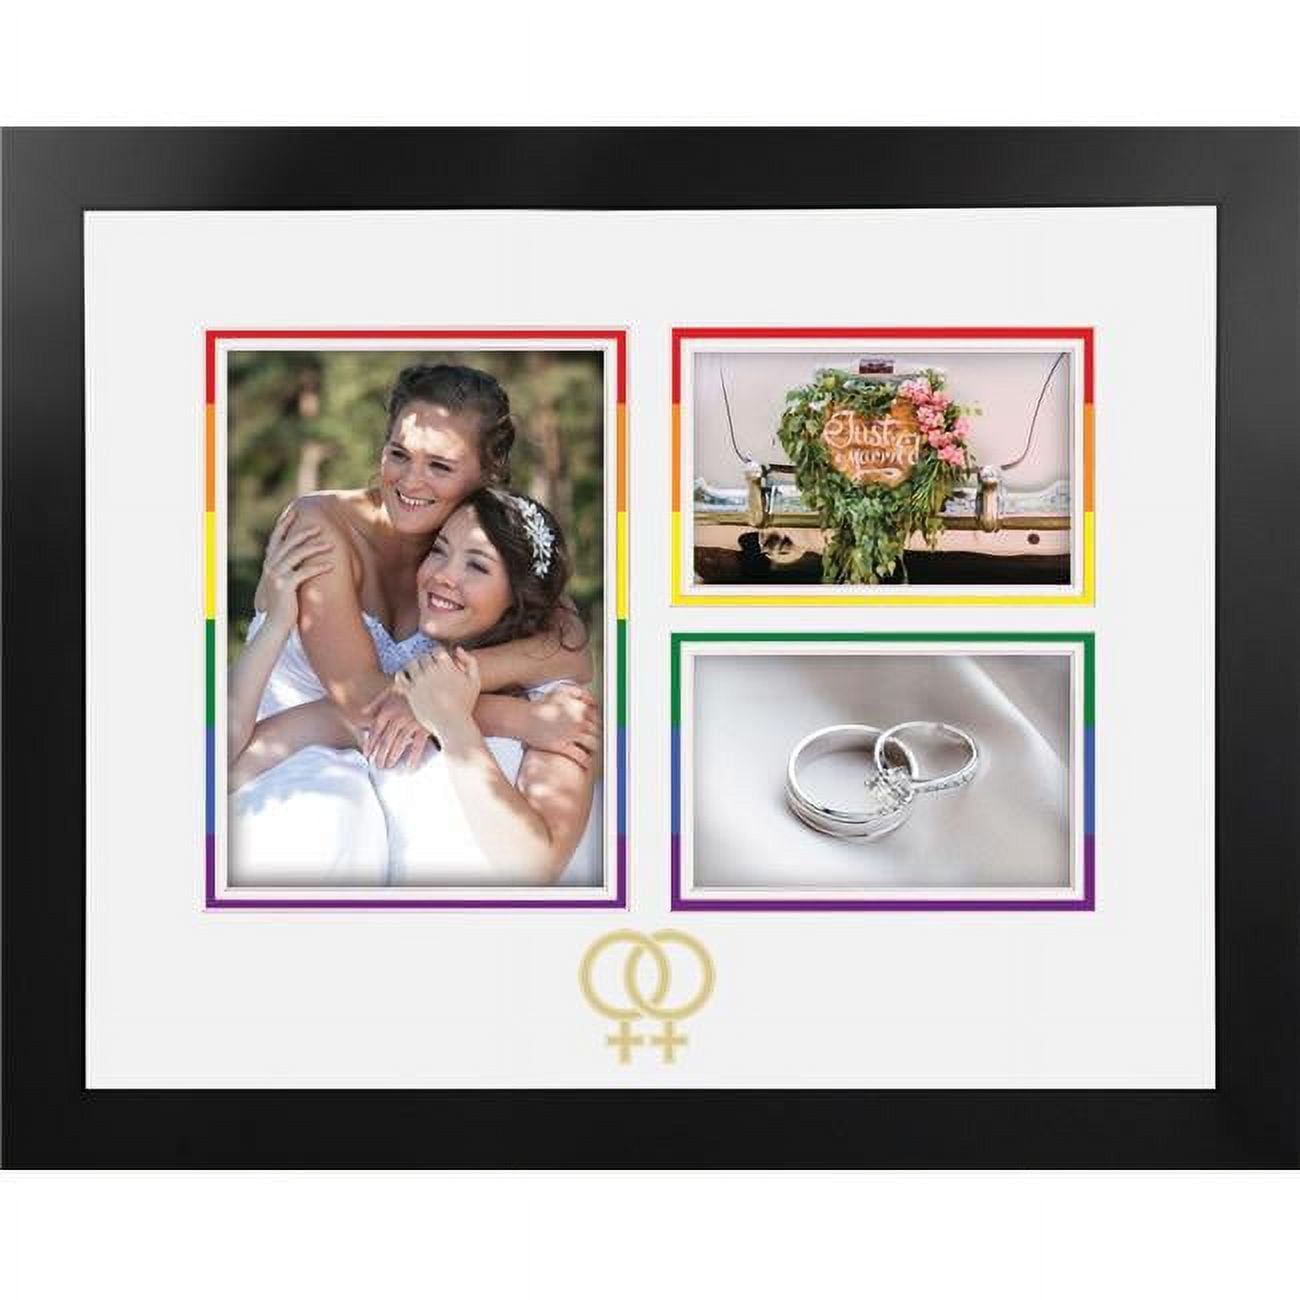 Picture of Celebration Frames MPVSWG02 LGBTQ Wedding Multi-Photo Frame with White & Rainbow Mat - Gold Interlocking Woman